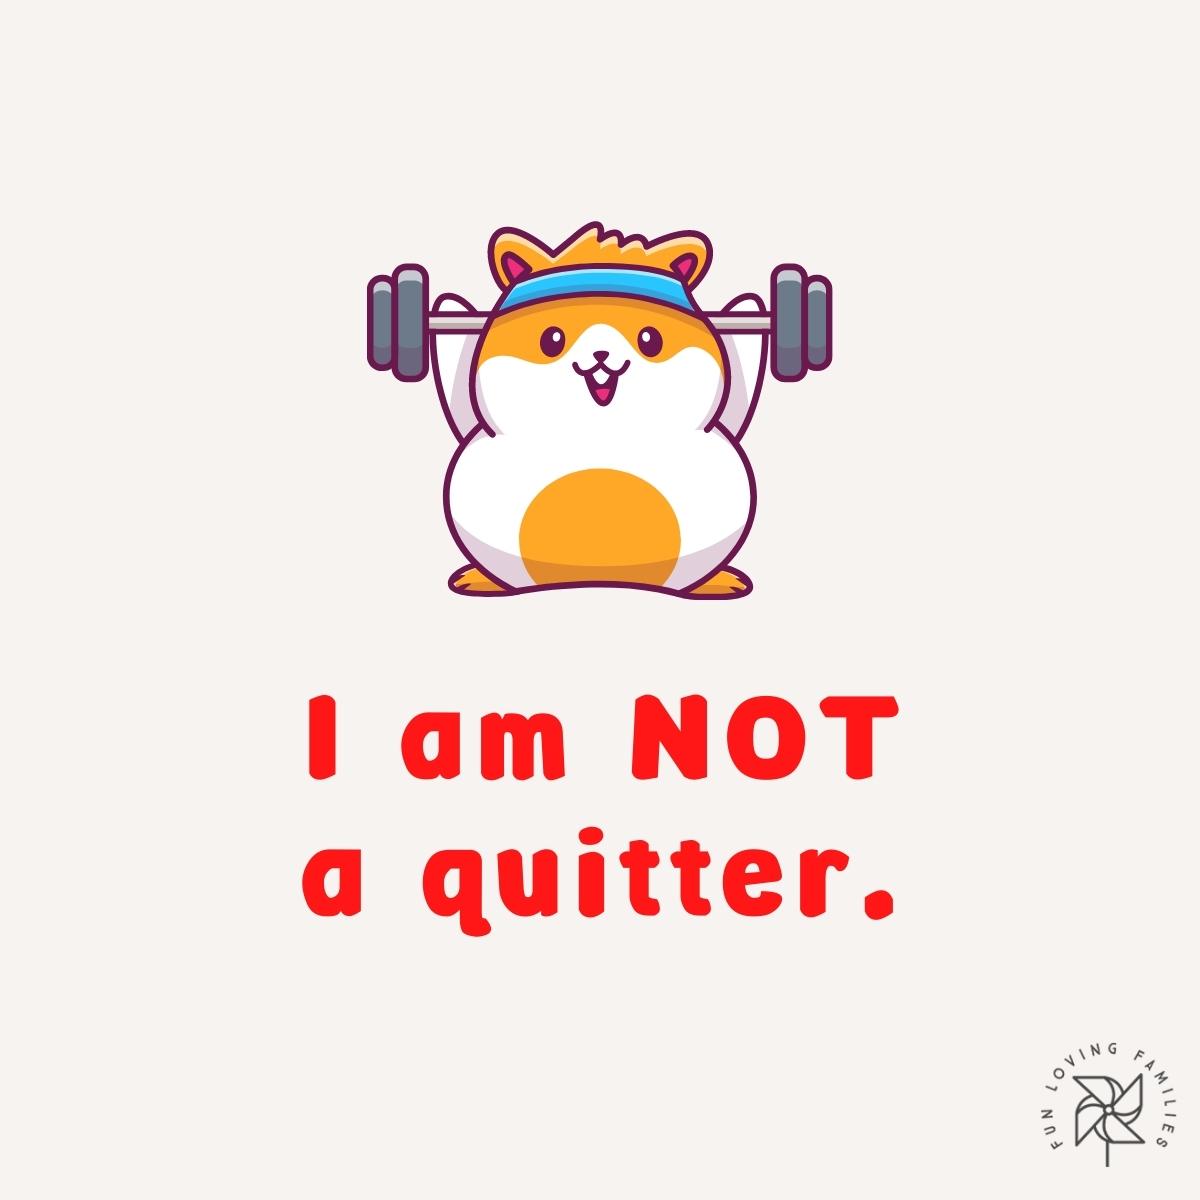 I am not a quitter affirmation